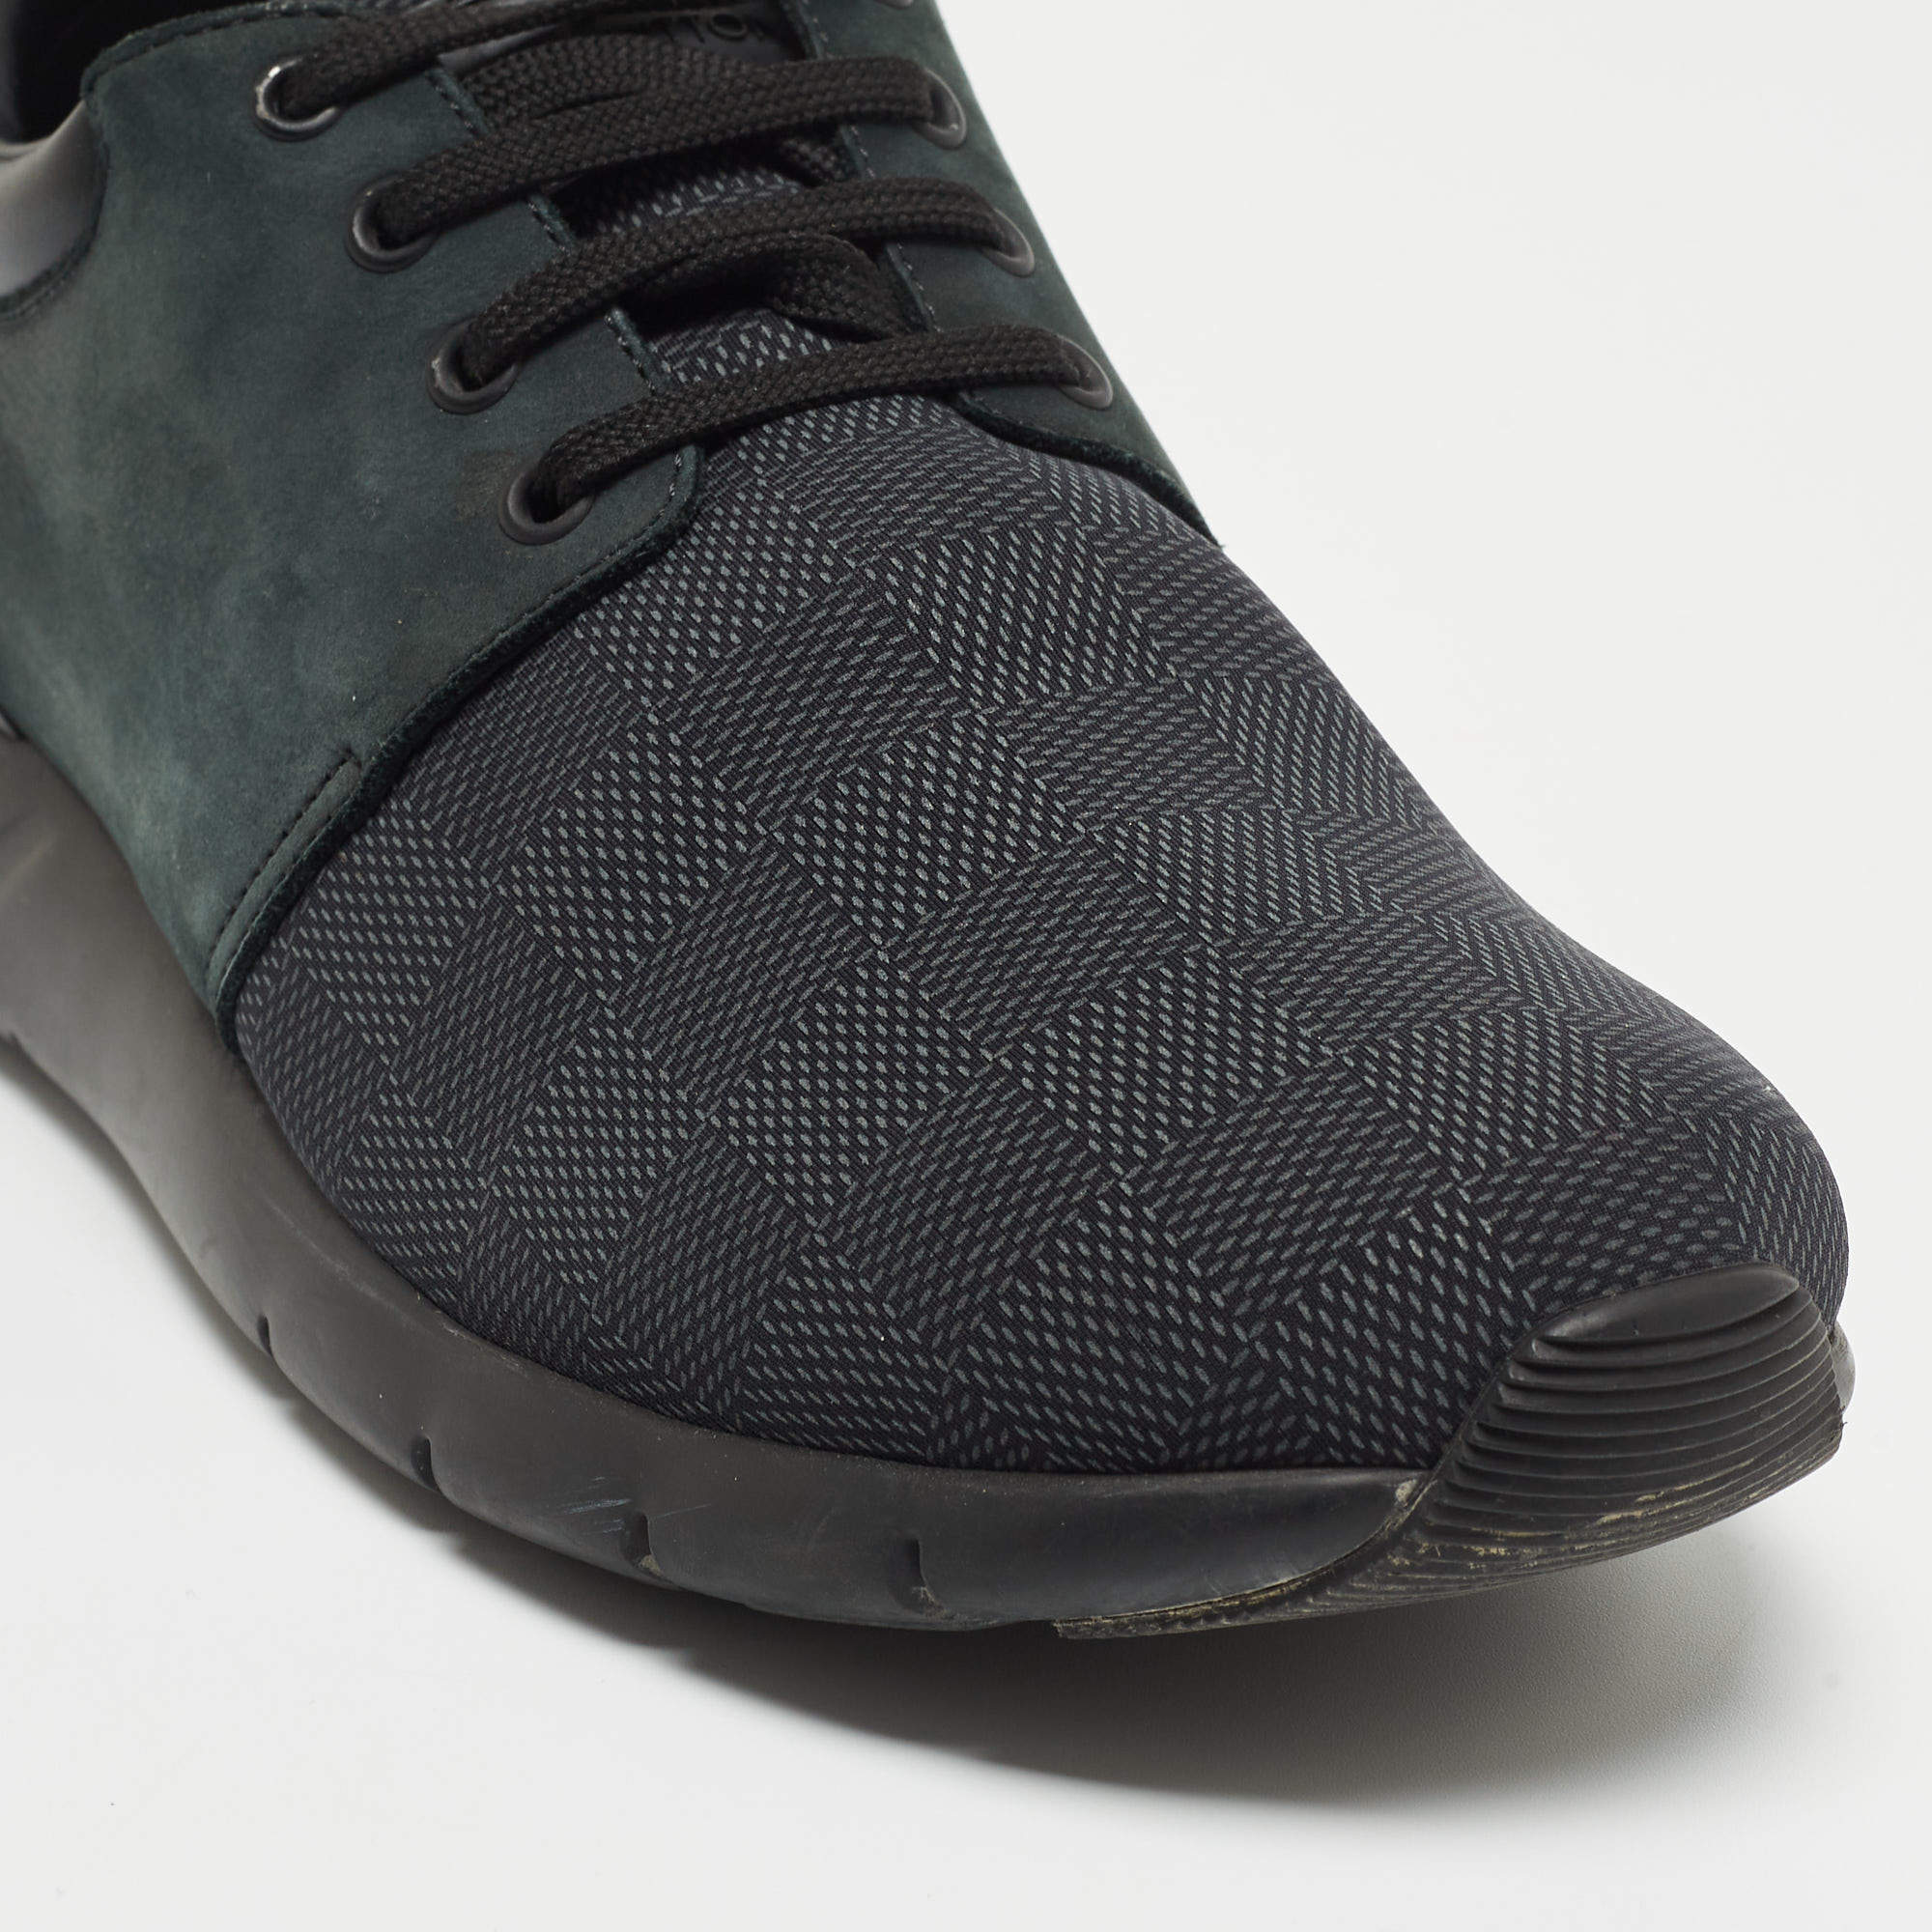 Louis Vuitton Fastlane Sneakers - Black Sneakers, Shoes